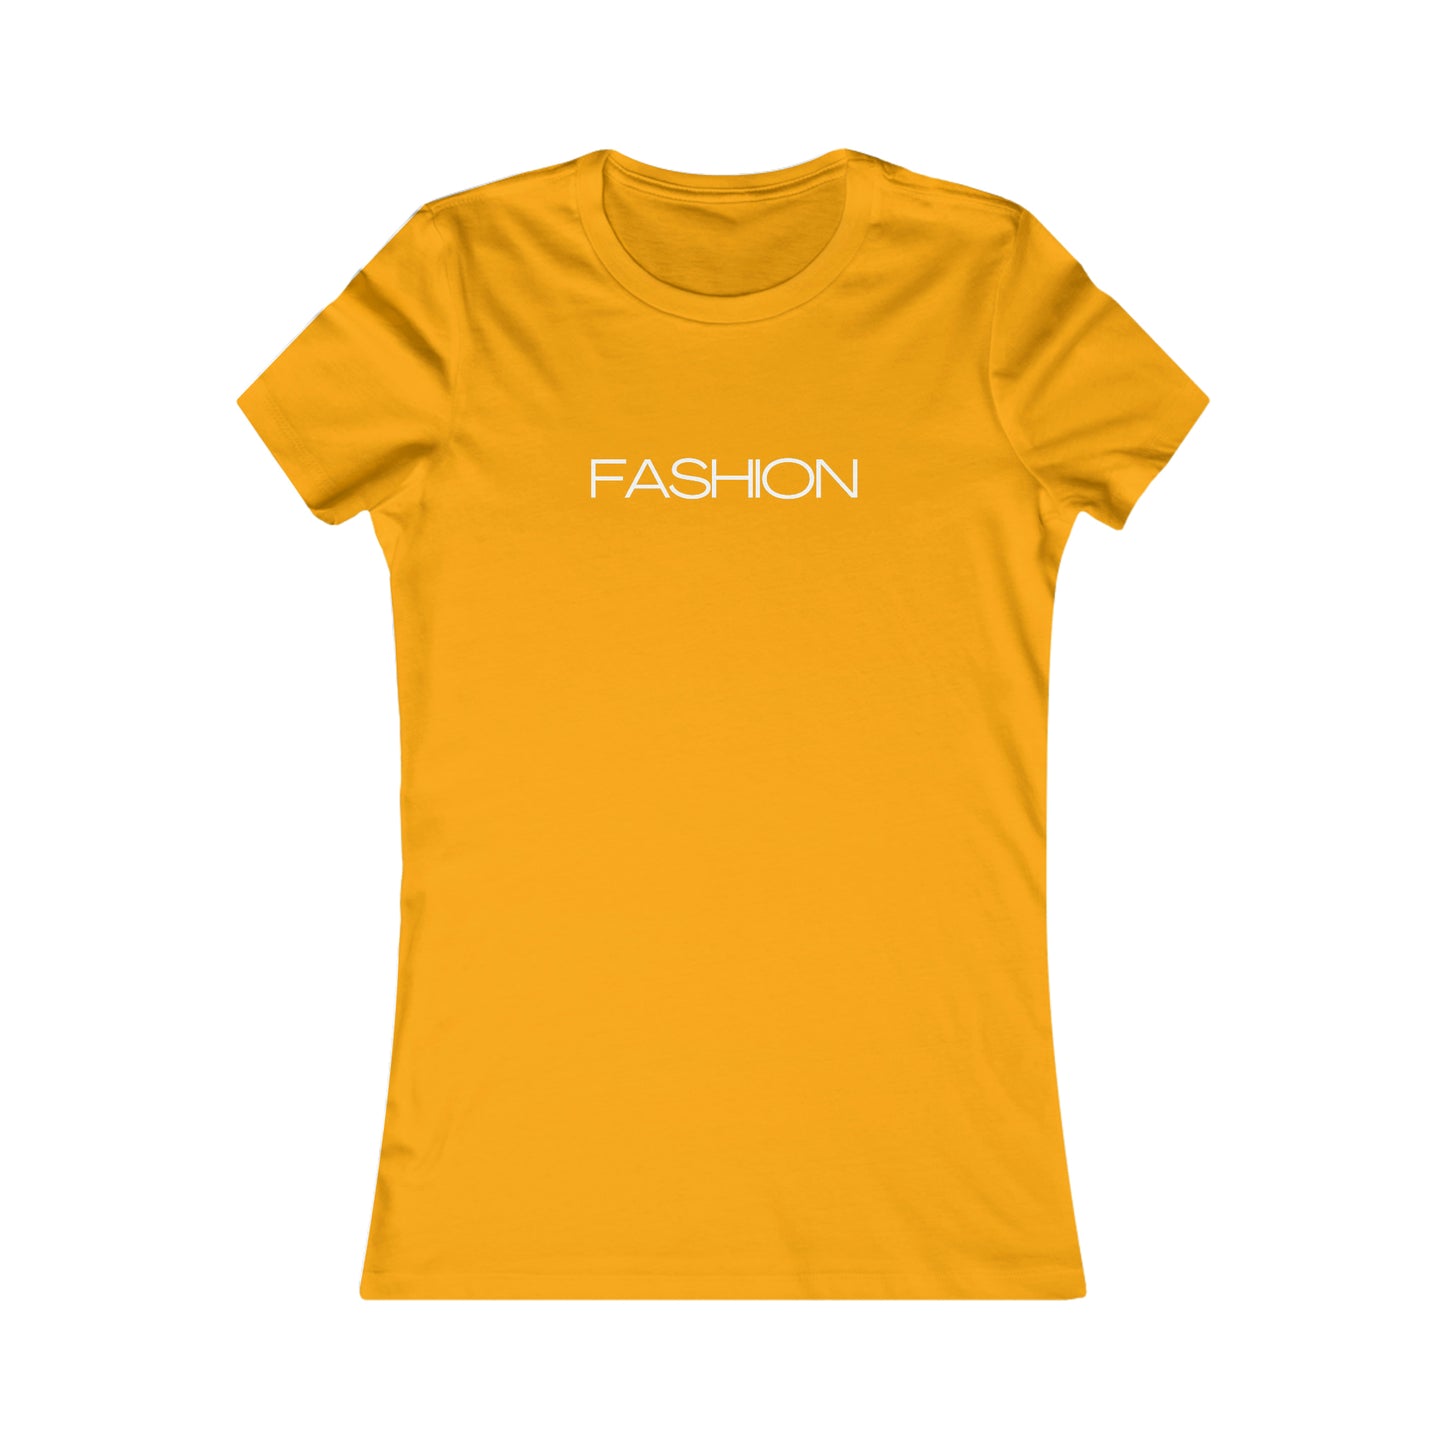 FASHION - Women's Favorite Tee